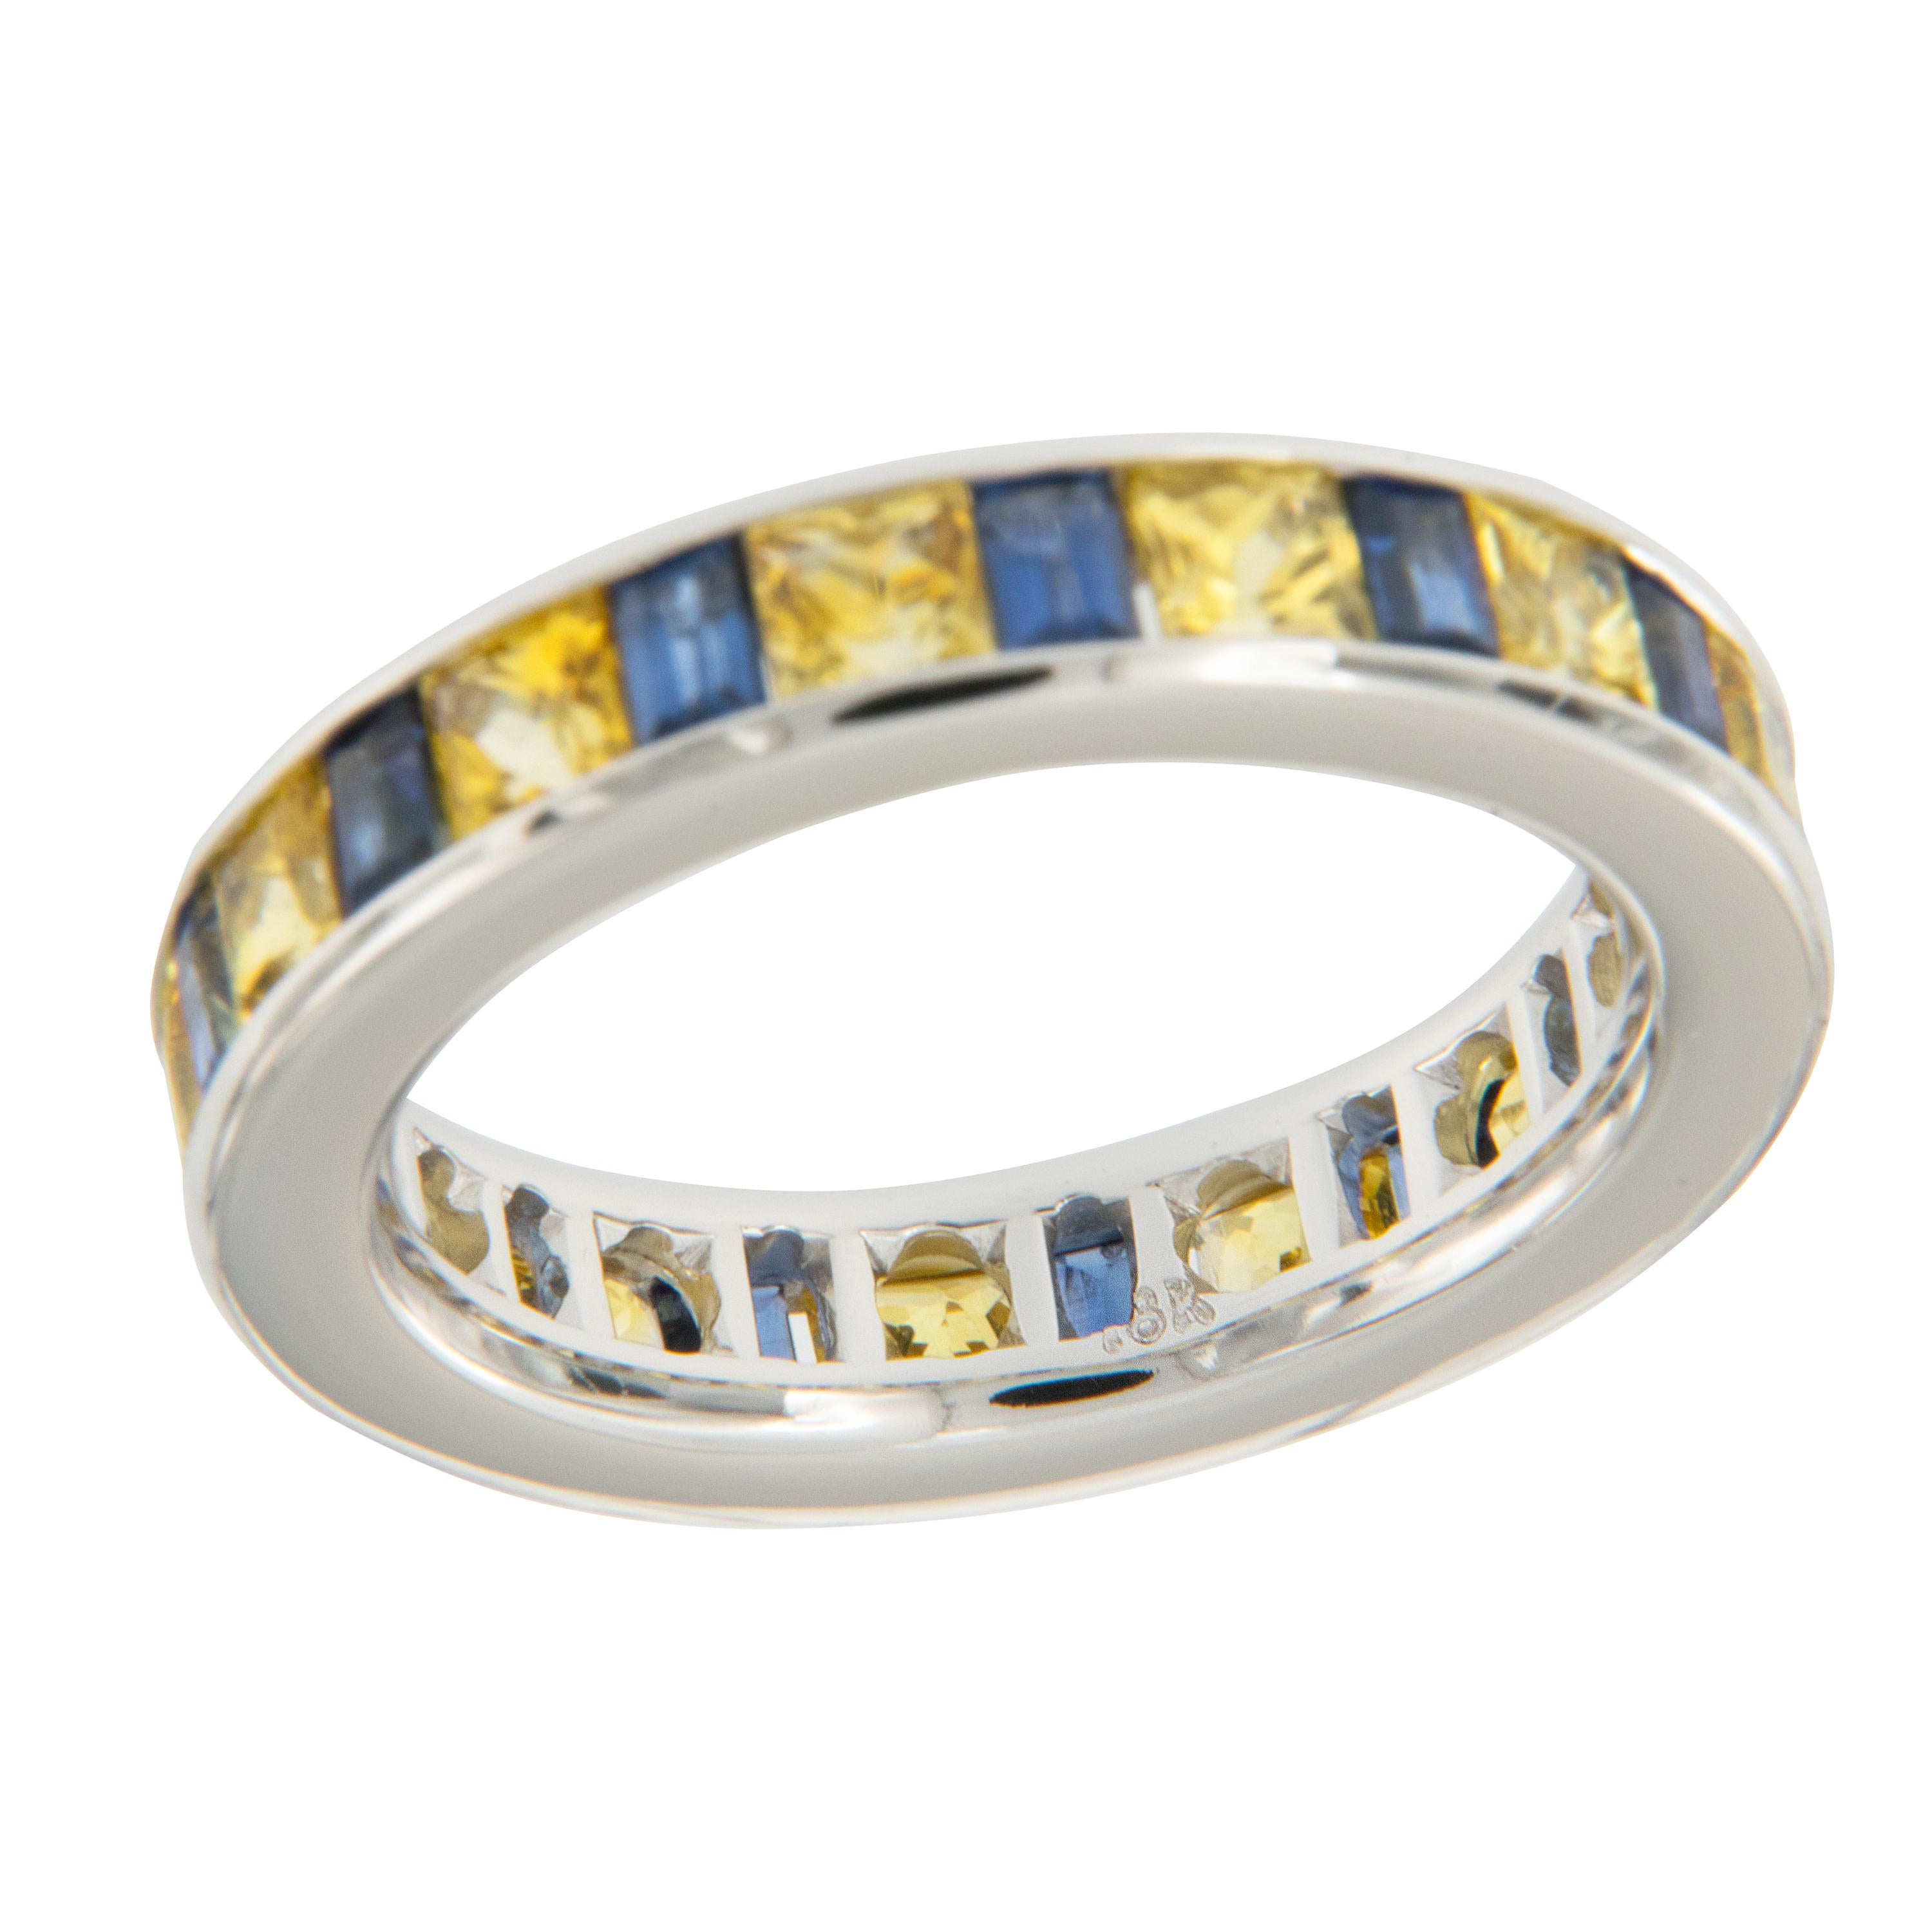 Modern William Rosenberg 18 Karat White Gold Blue & Yellow Sapphire Ring 4.48 Carat TW